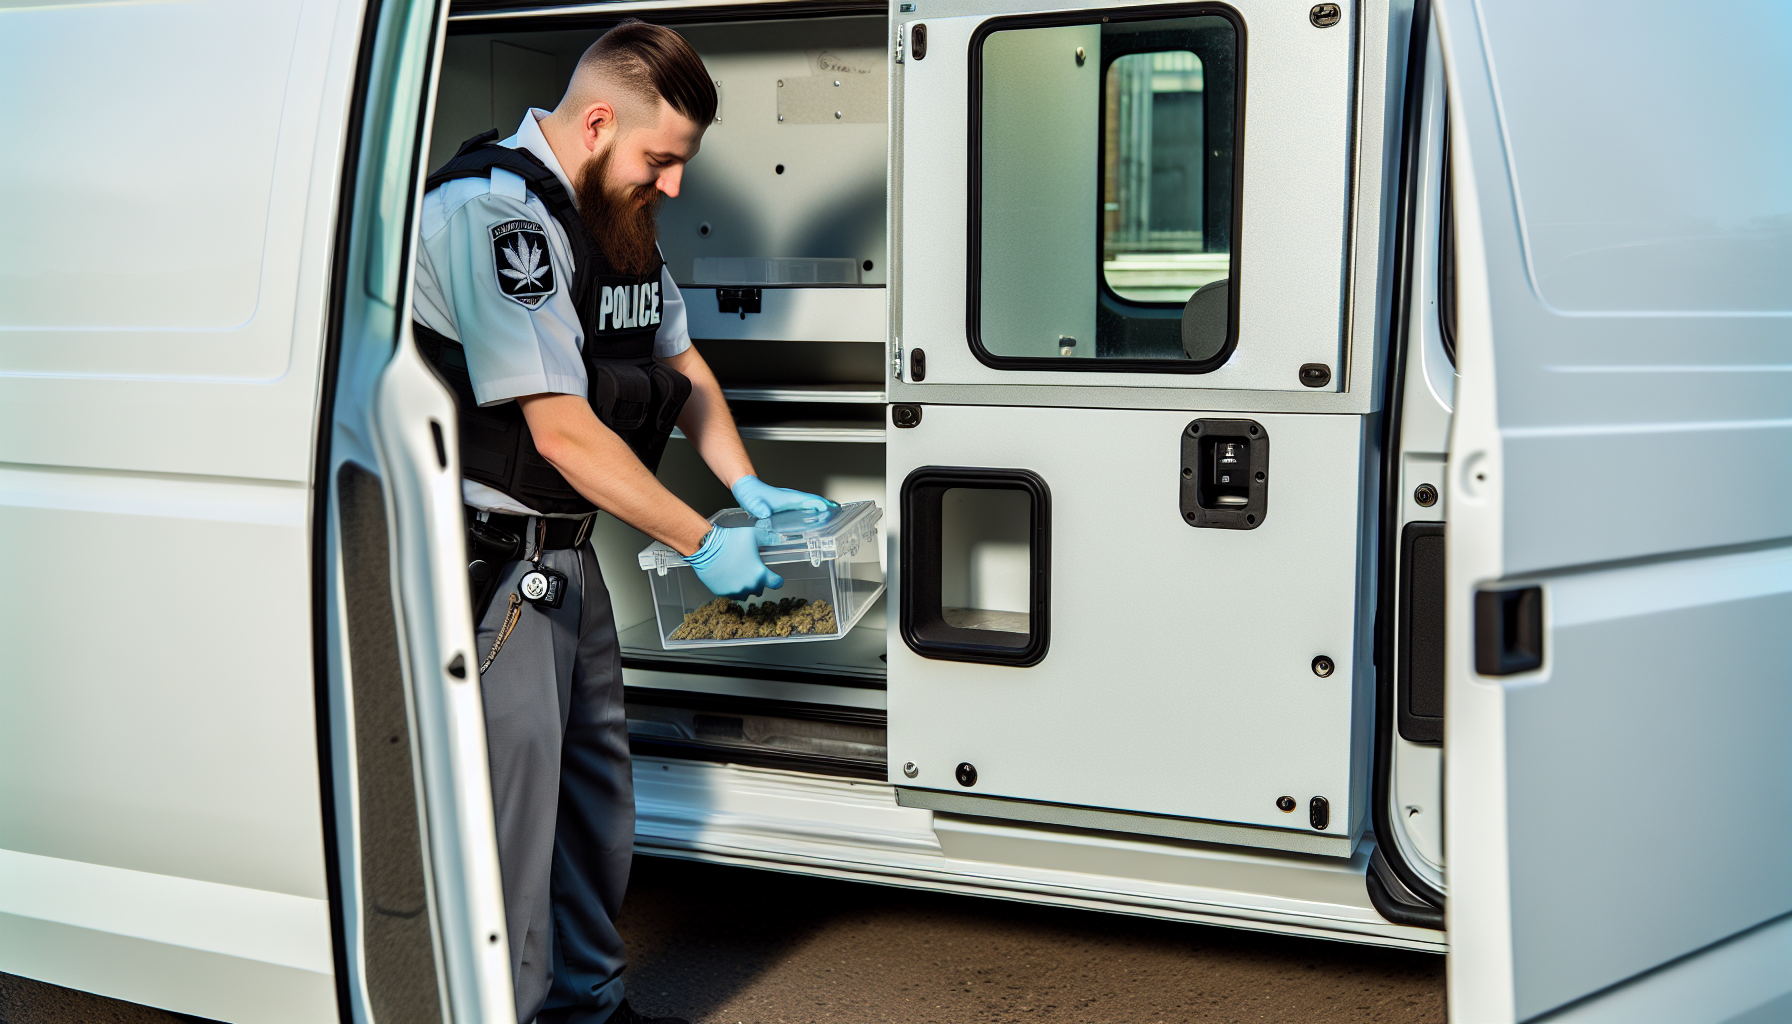 Secure storage of medical marijuana in a vehicle